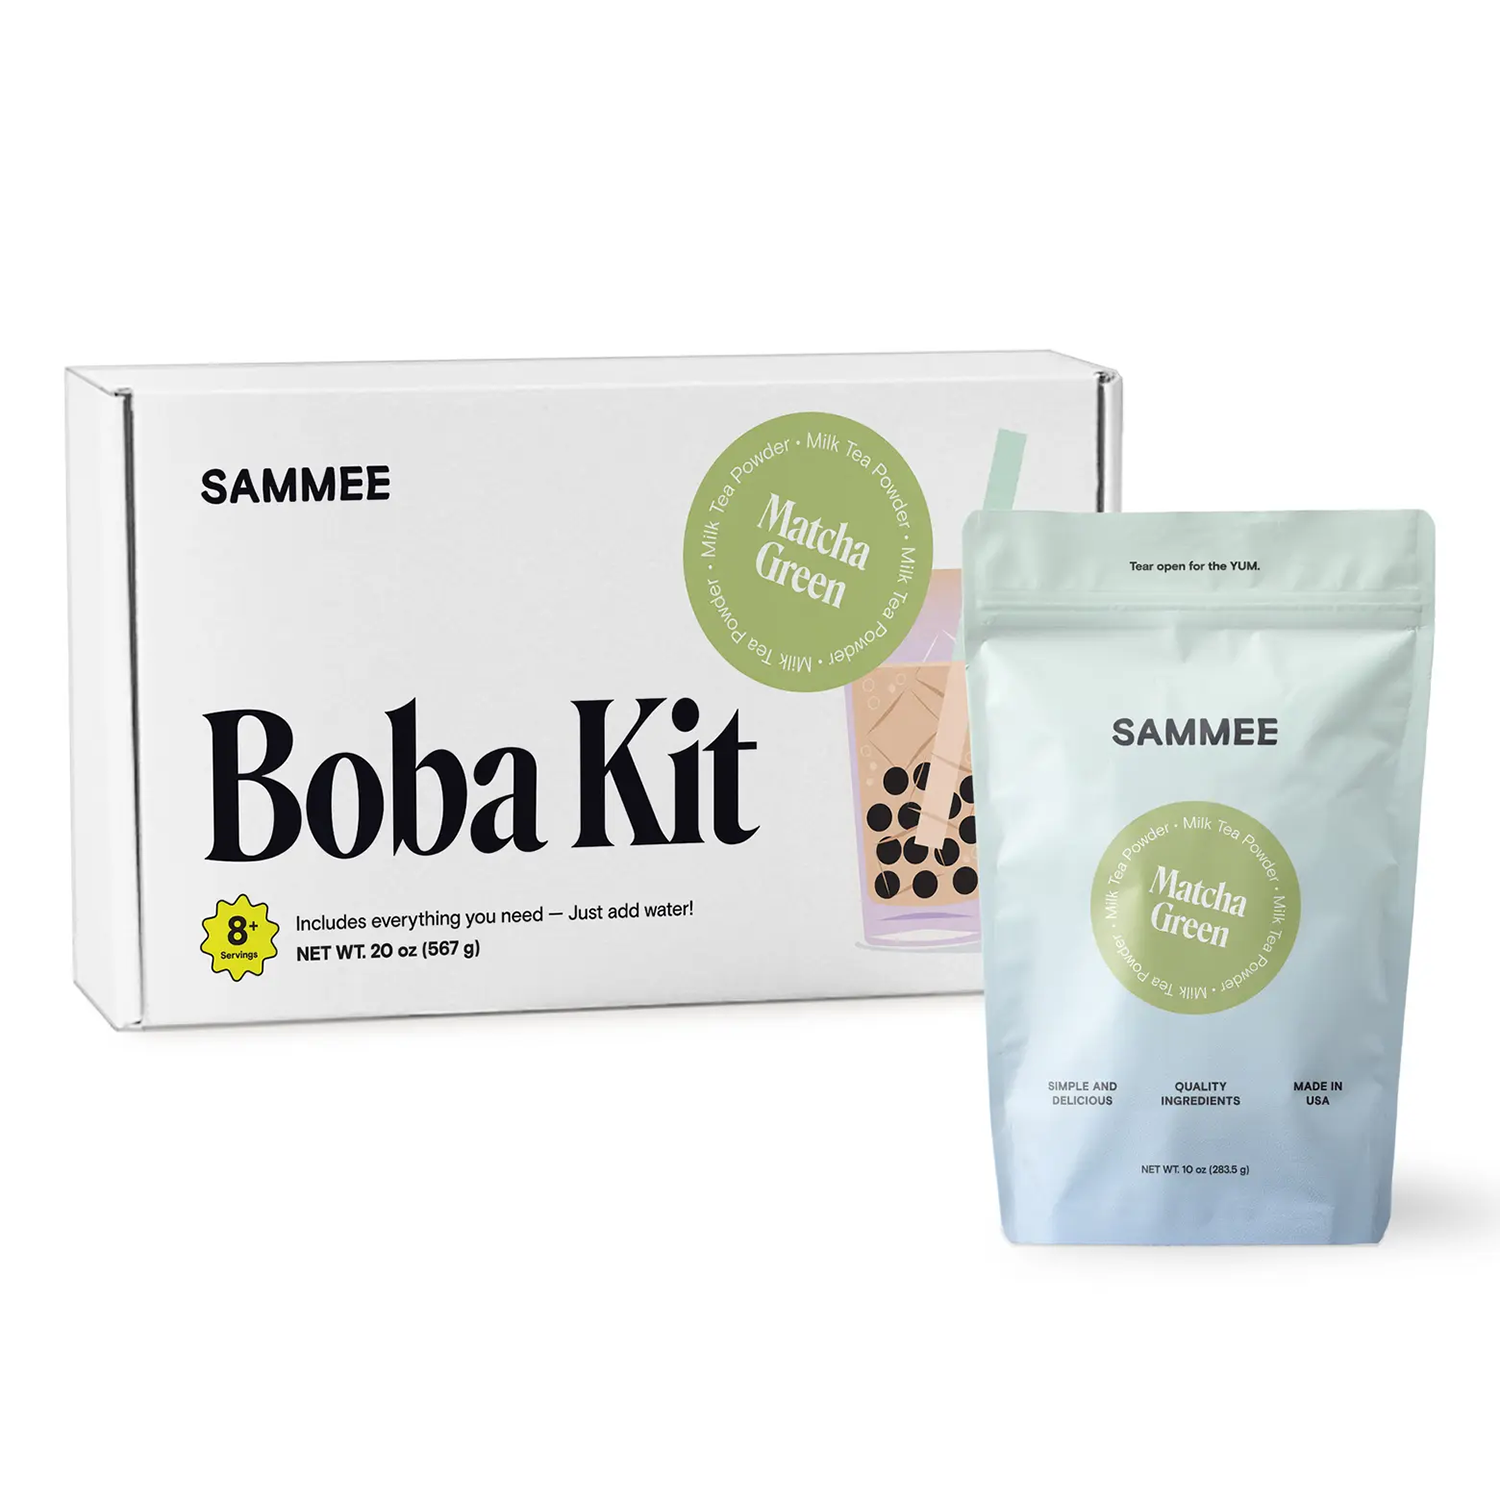 sammee matcha green milk tea powder boba kit